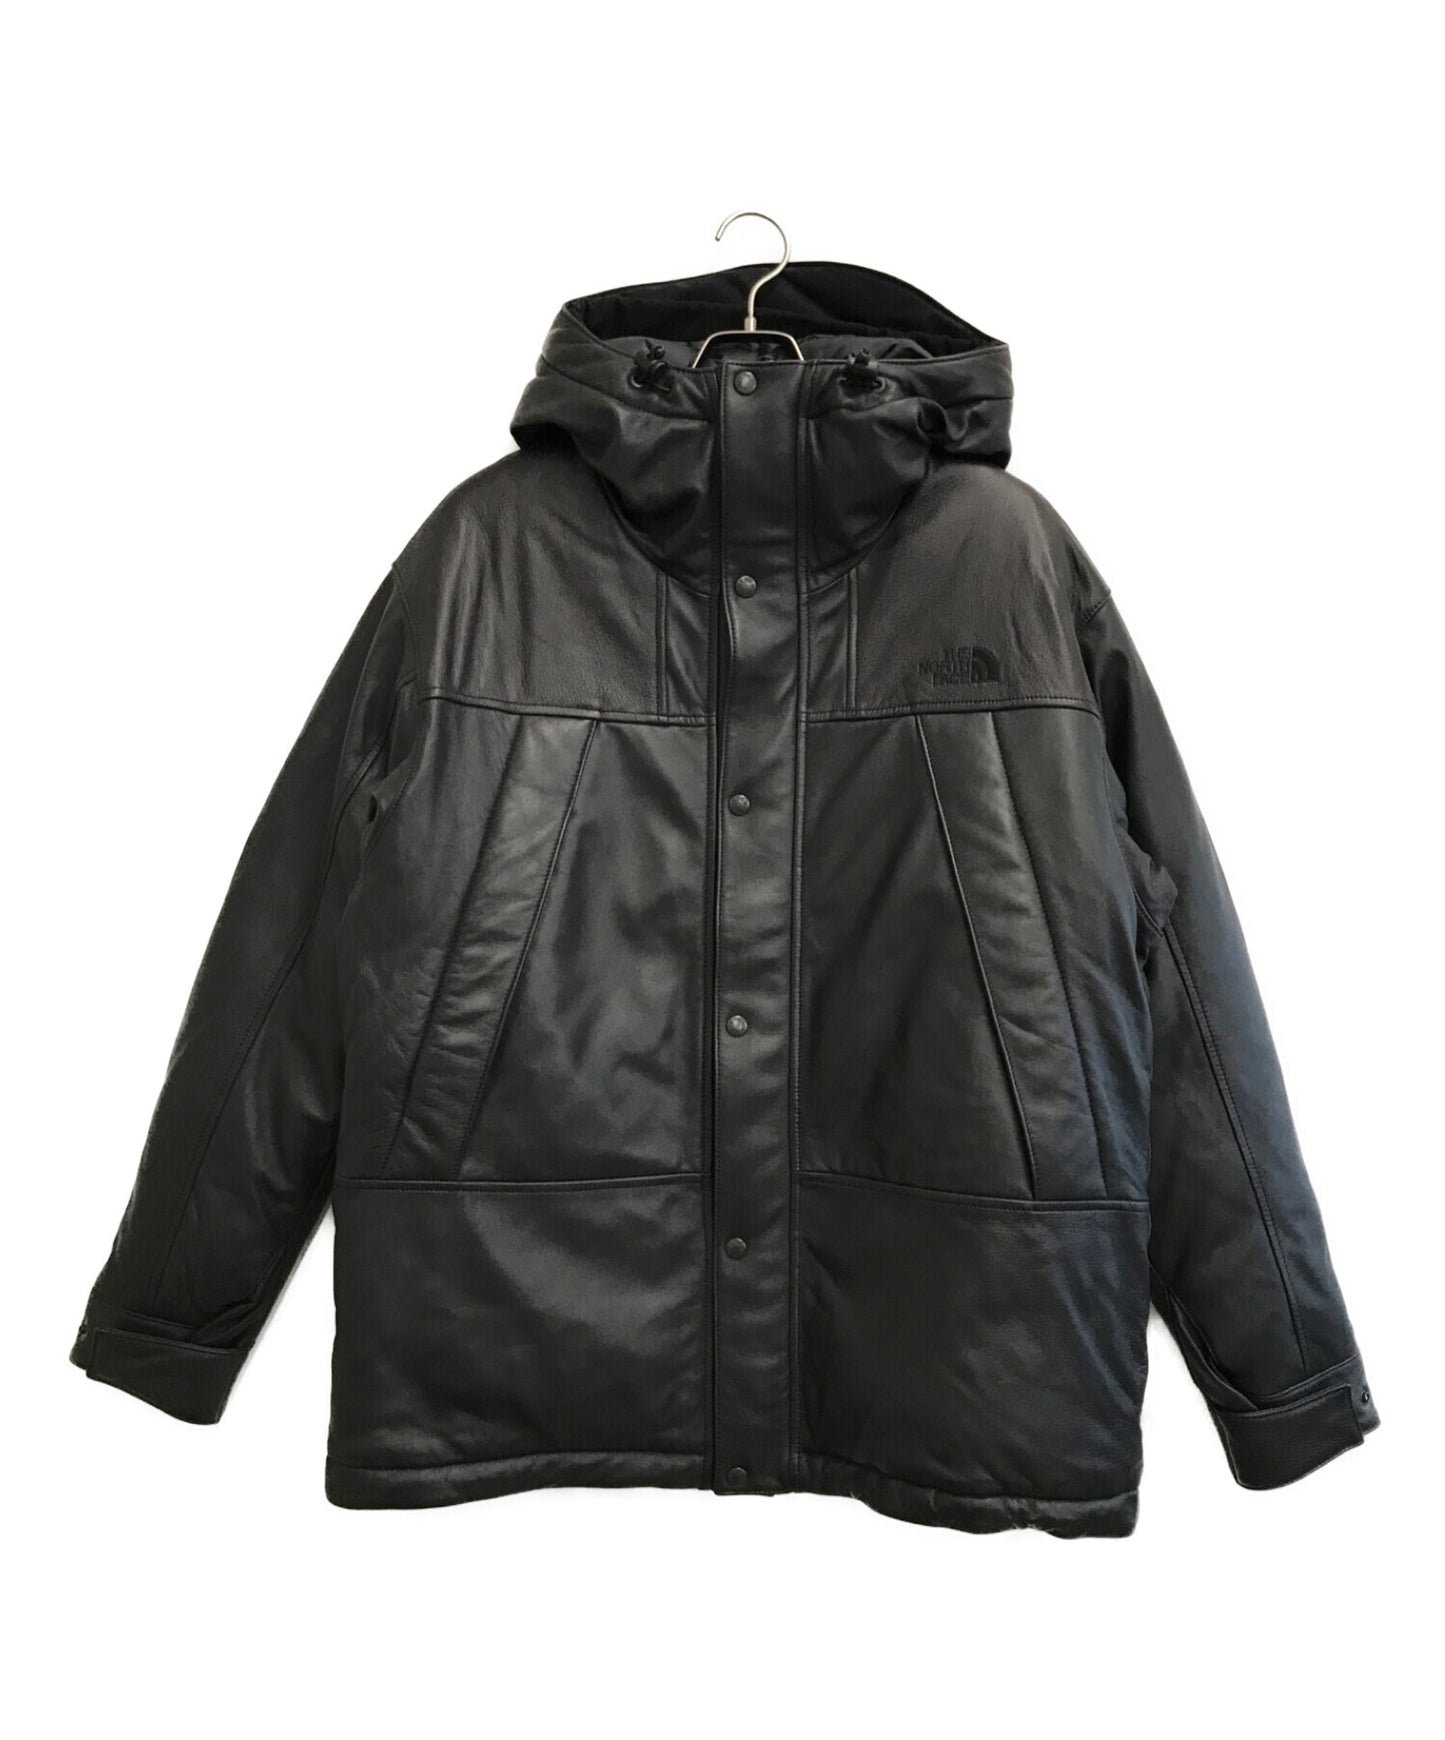 THE NORTHFACE PURPLELABEL Mountain Down Leather Jacket / Leather Jacket /  Mountain Jacket / Hooded Jacket / Down Jacket / Outerwear ND2868N